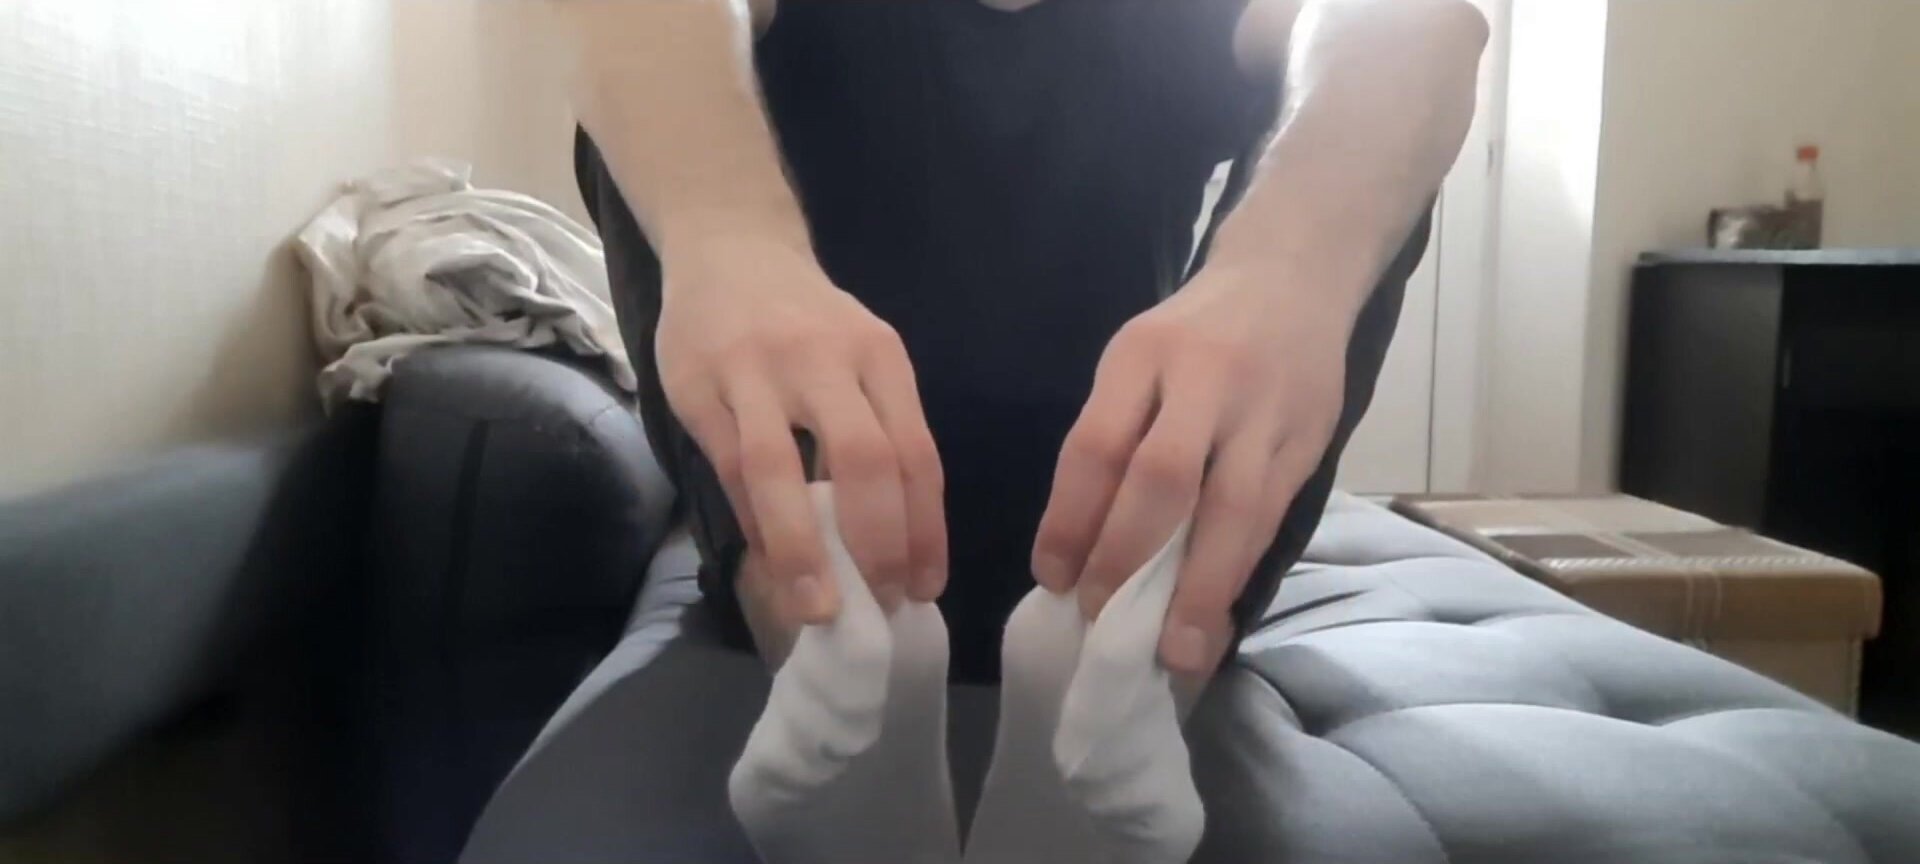 Twinks Sexy Socks and Huge Feet